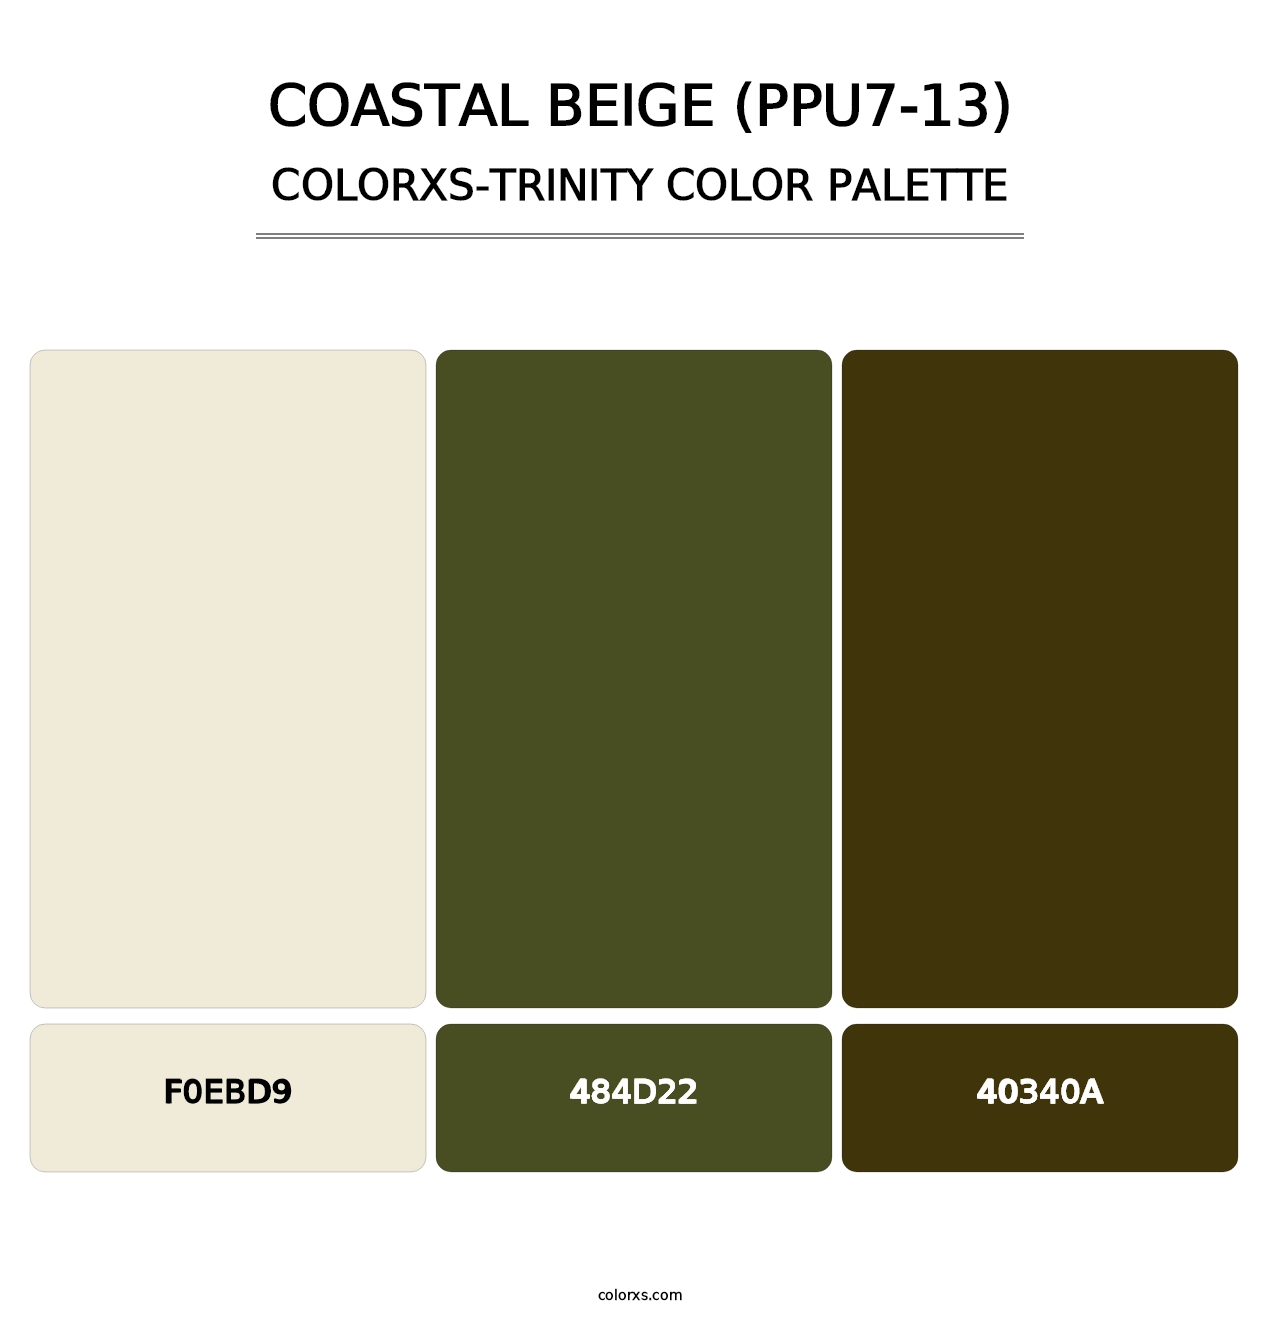 Coastal Beige (PPU7-13) - Colorxs Trinity Palette